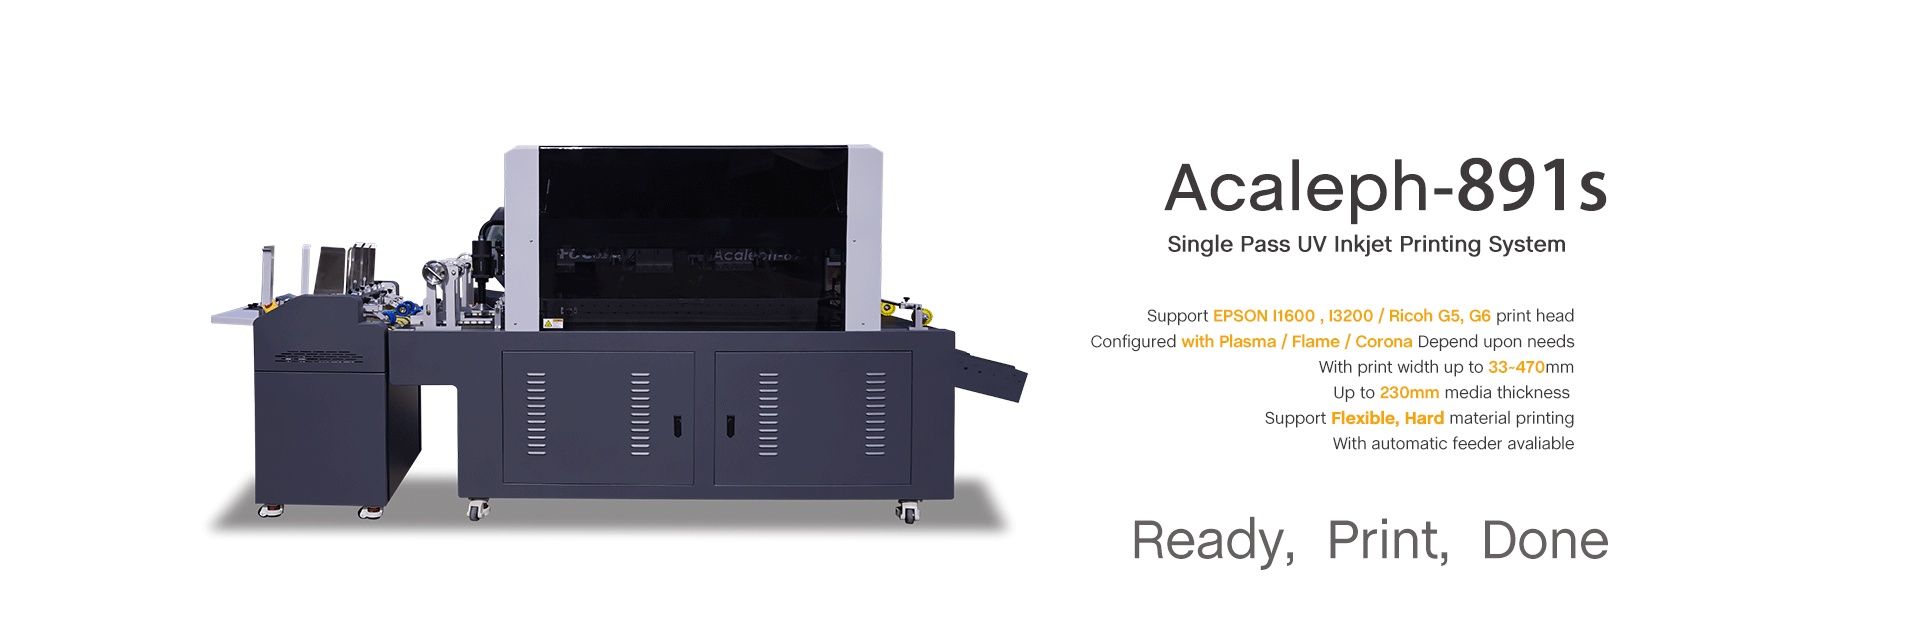 Focus Acaleph-891s Single Pass UV Printer